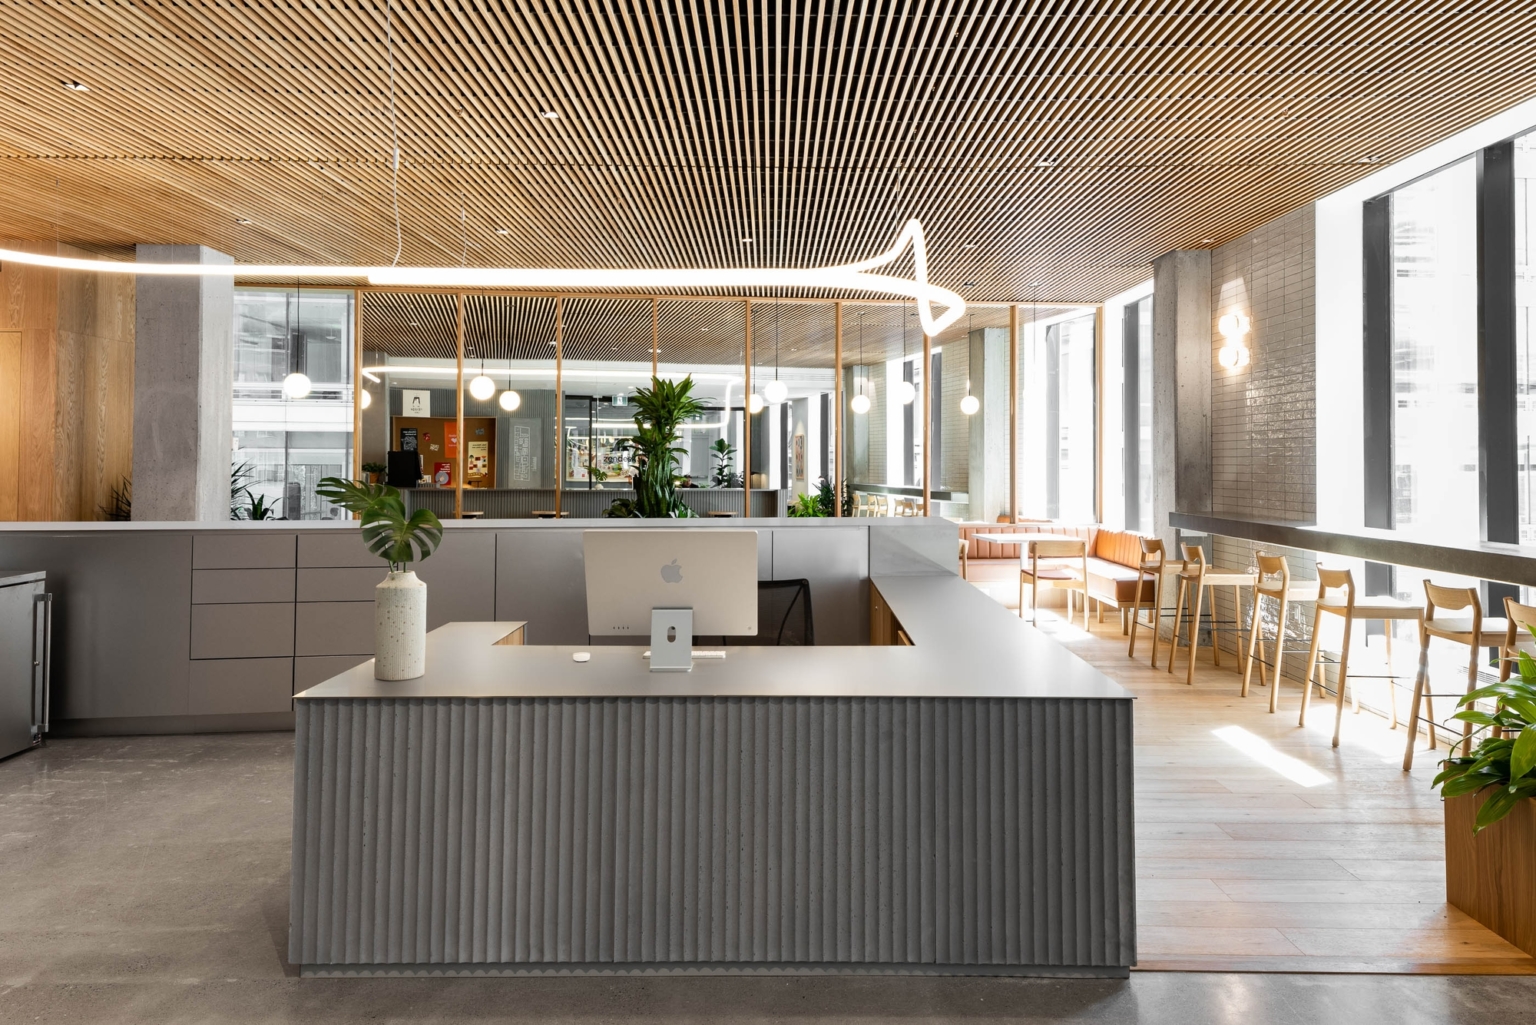 【Zendeskのオフィスデザイン】- カナダ, モントリオールの受付/エントランススペース